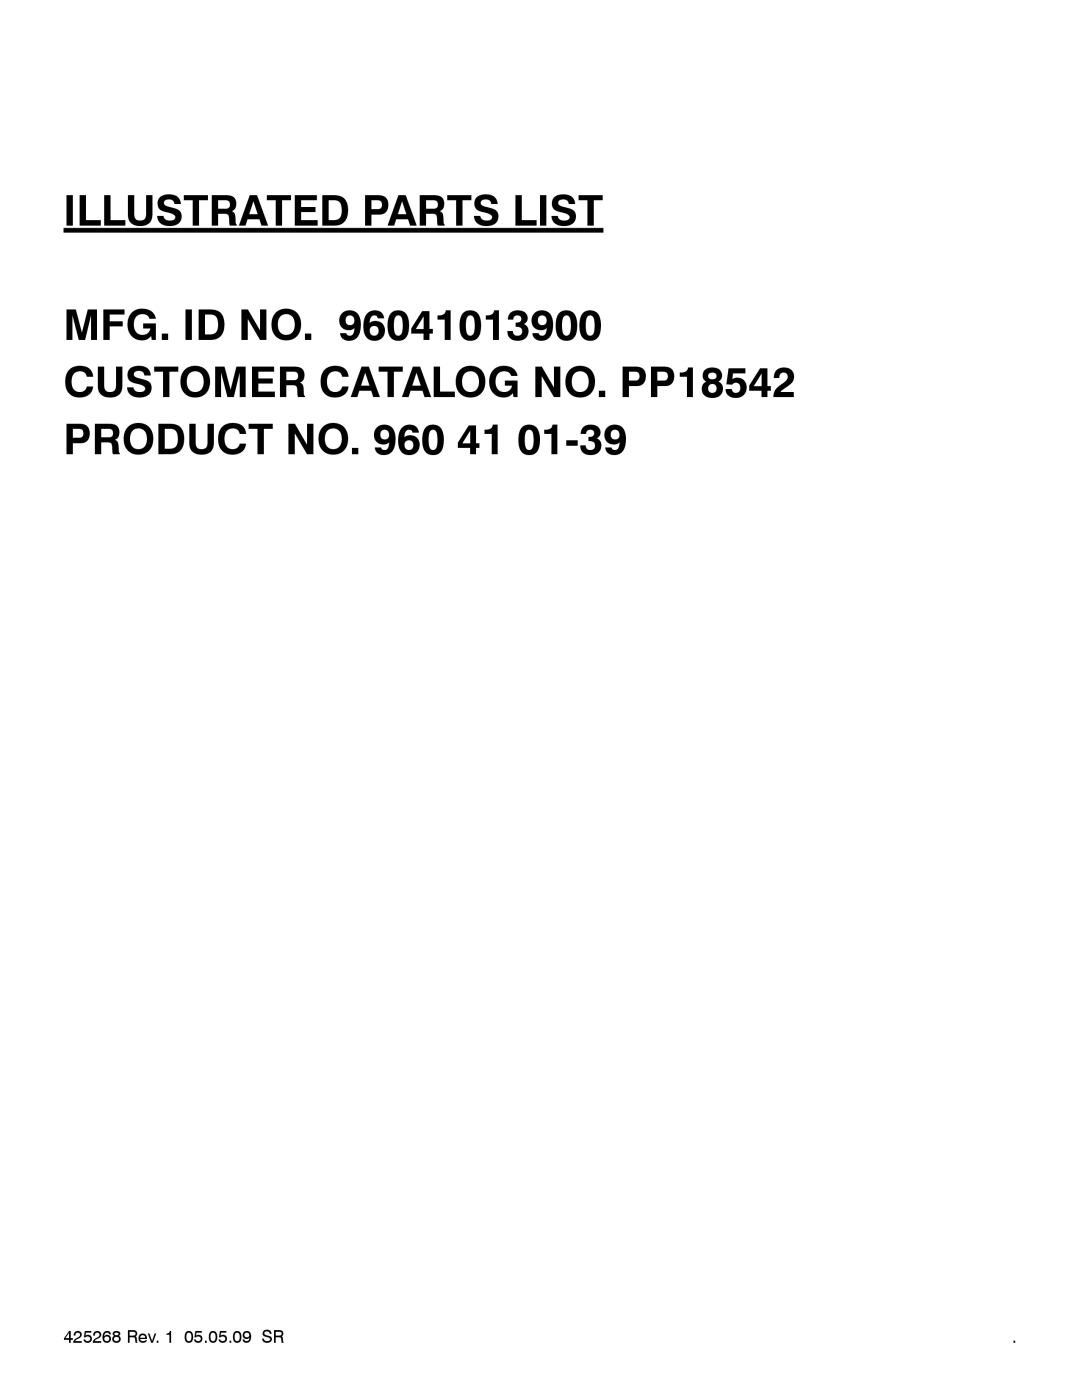 Poulan 960 41 01-39, 96041013900 manual Illustrated Parts List, 425268 Rev. 1 05.05.09 SR 